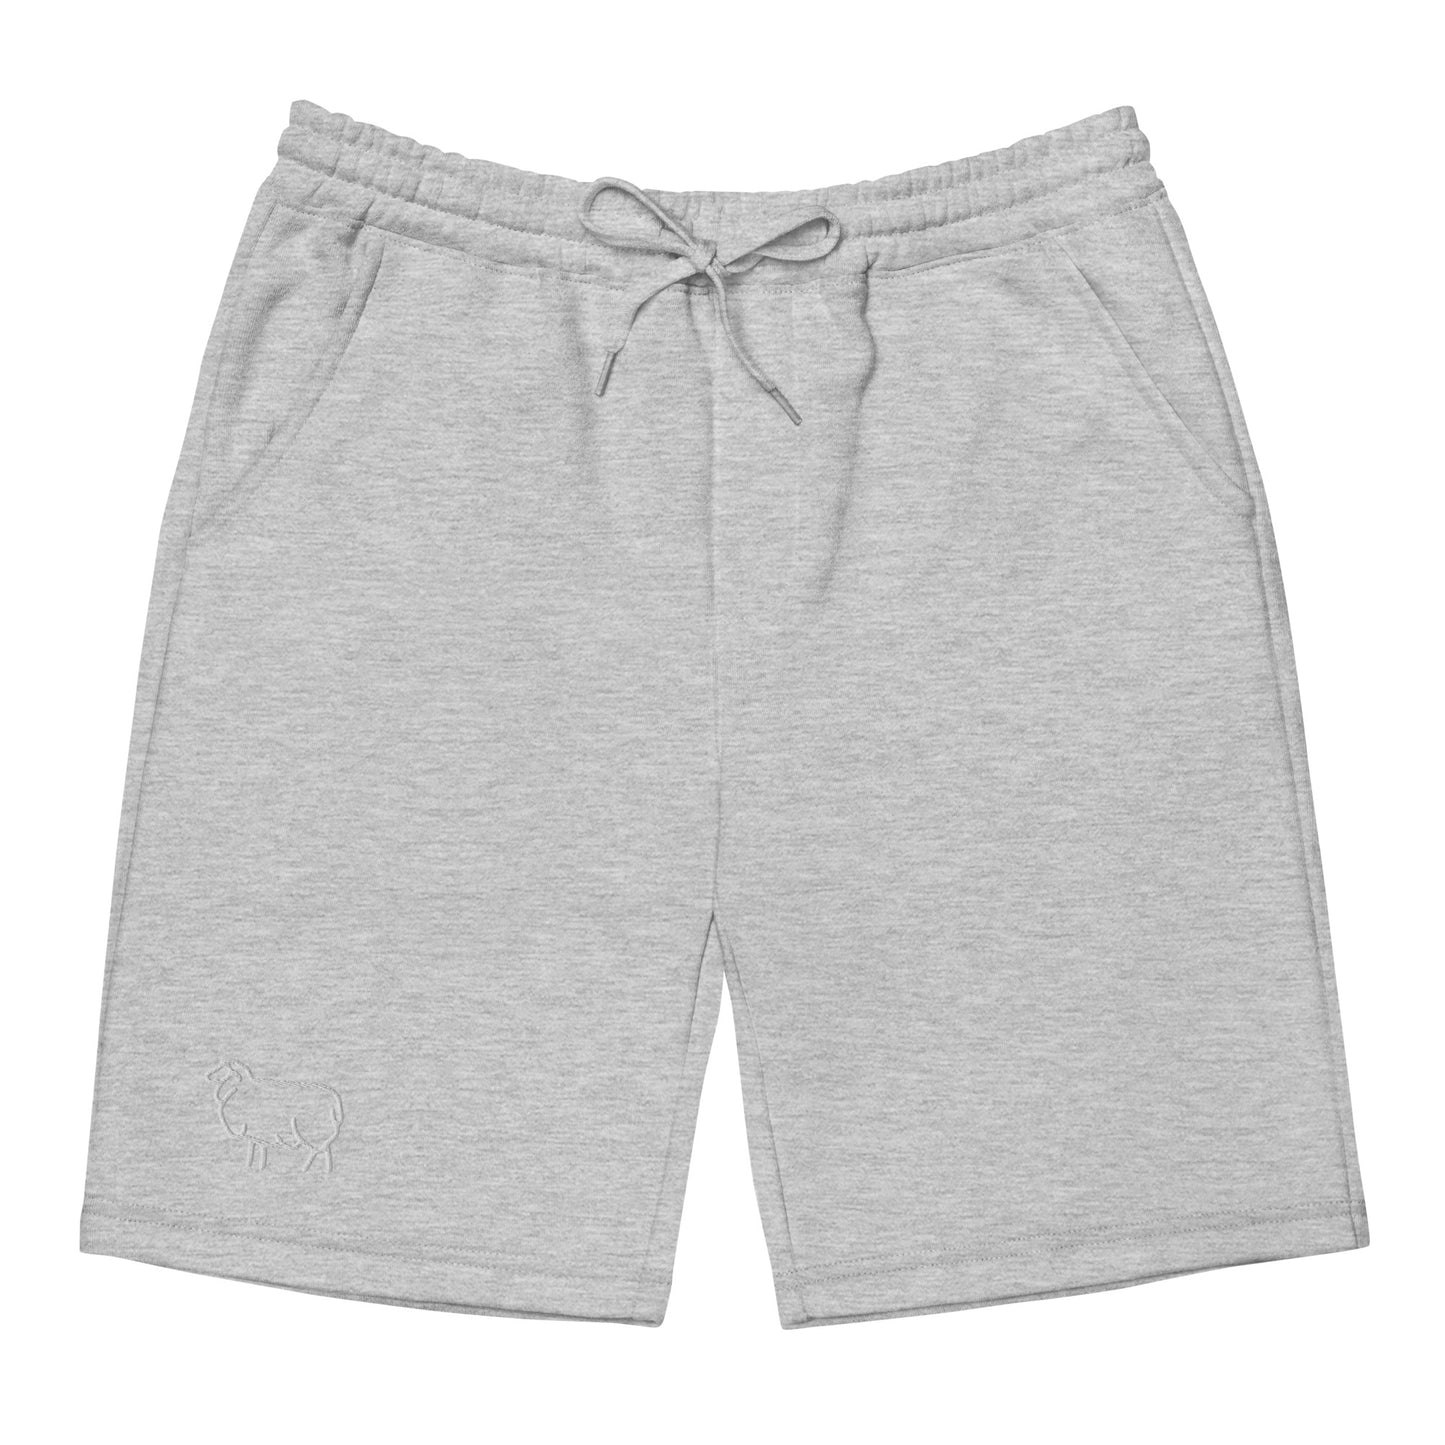 BlackSheep Sweatpants Shorts